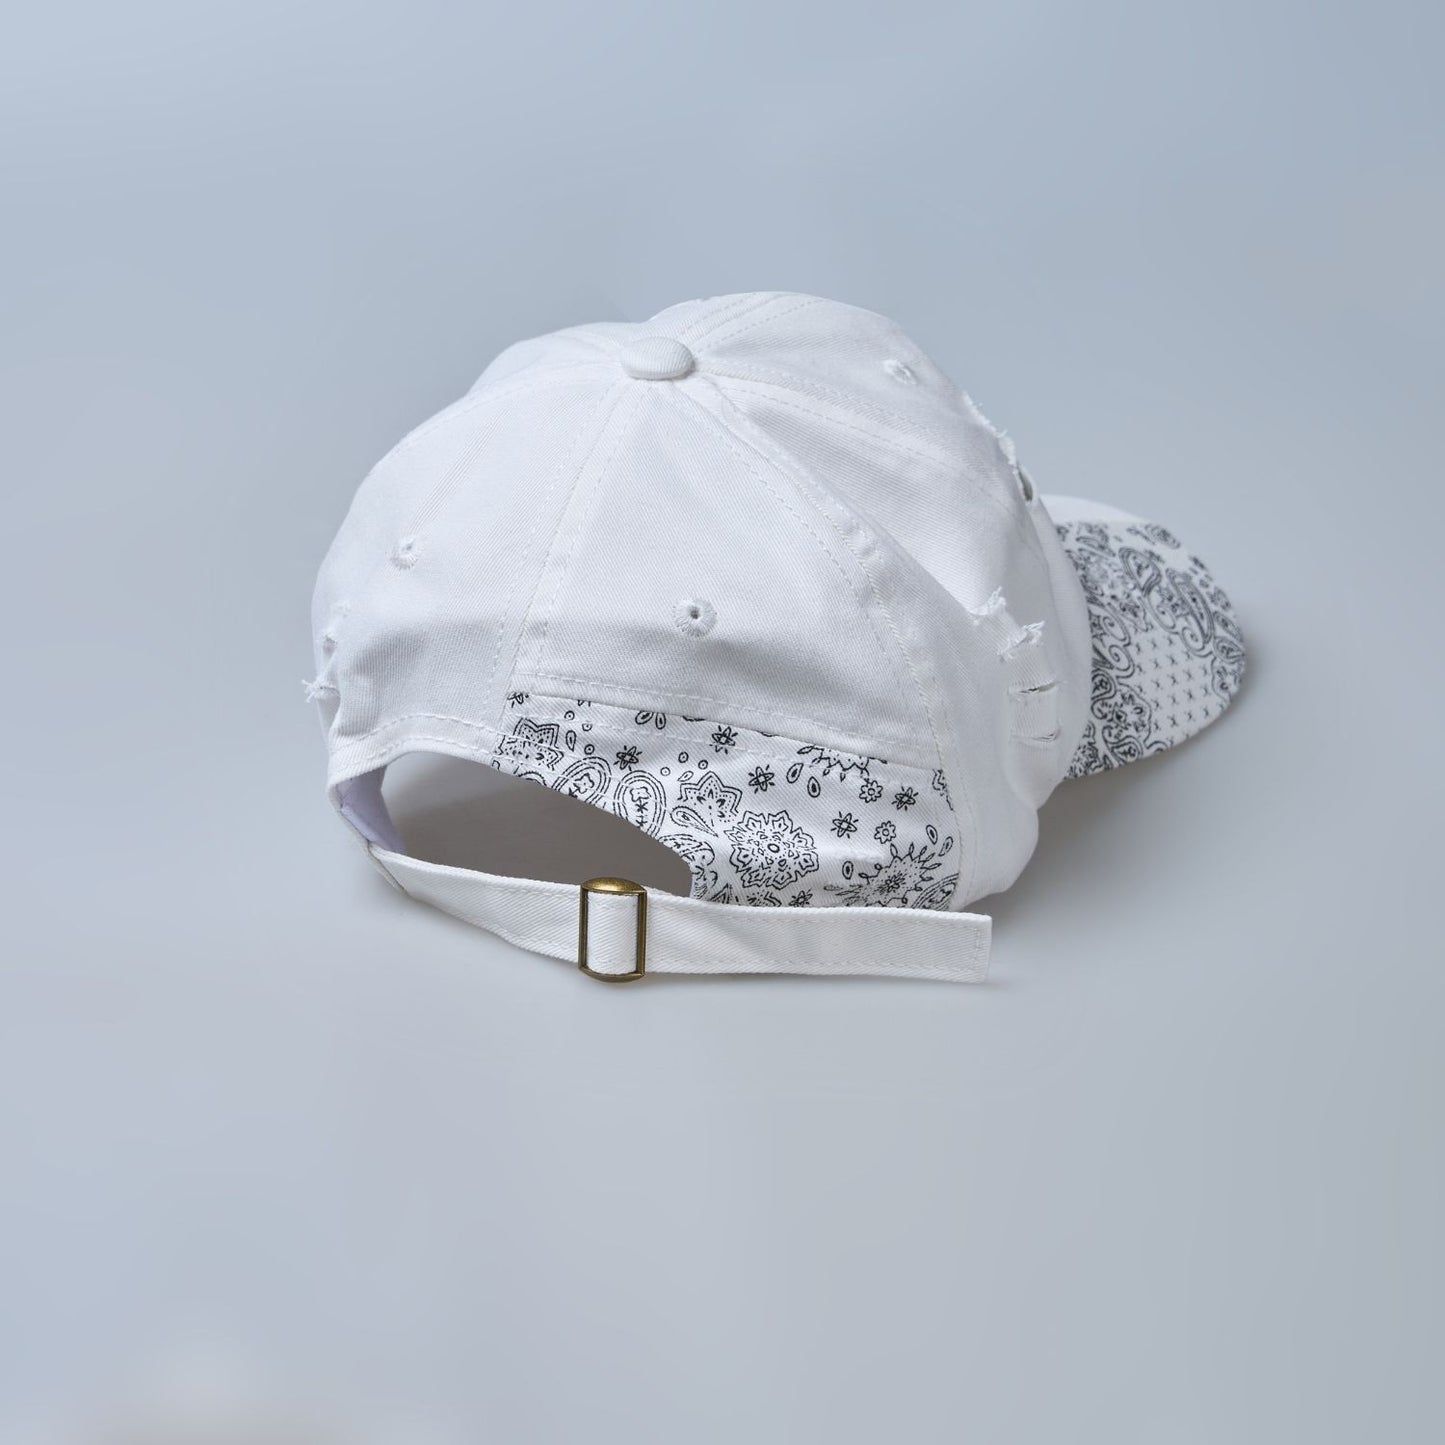 white colored, wide brim designer cap for men with adjustable strap, back view.